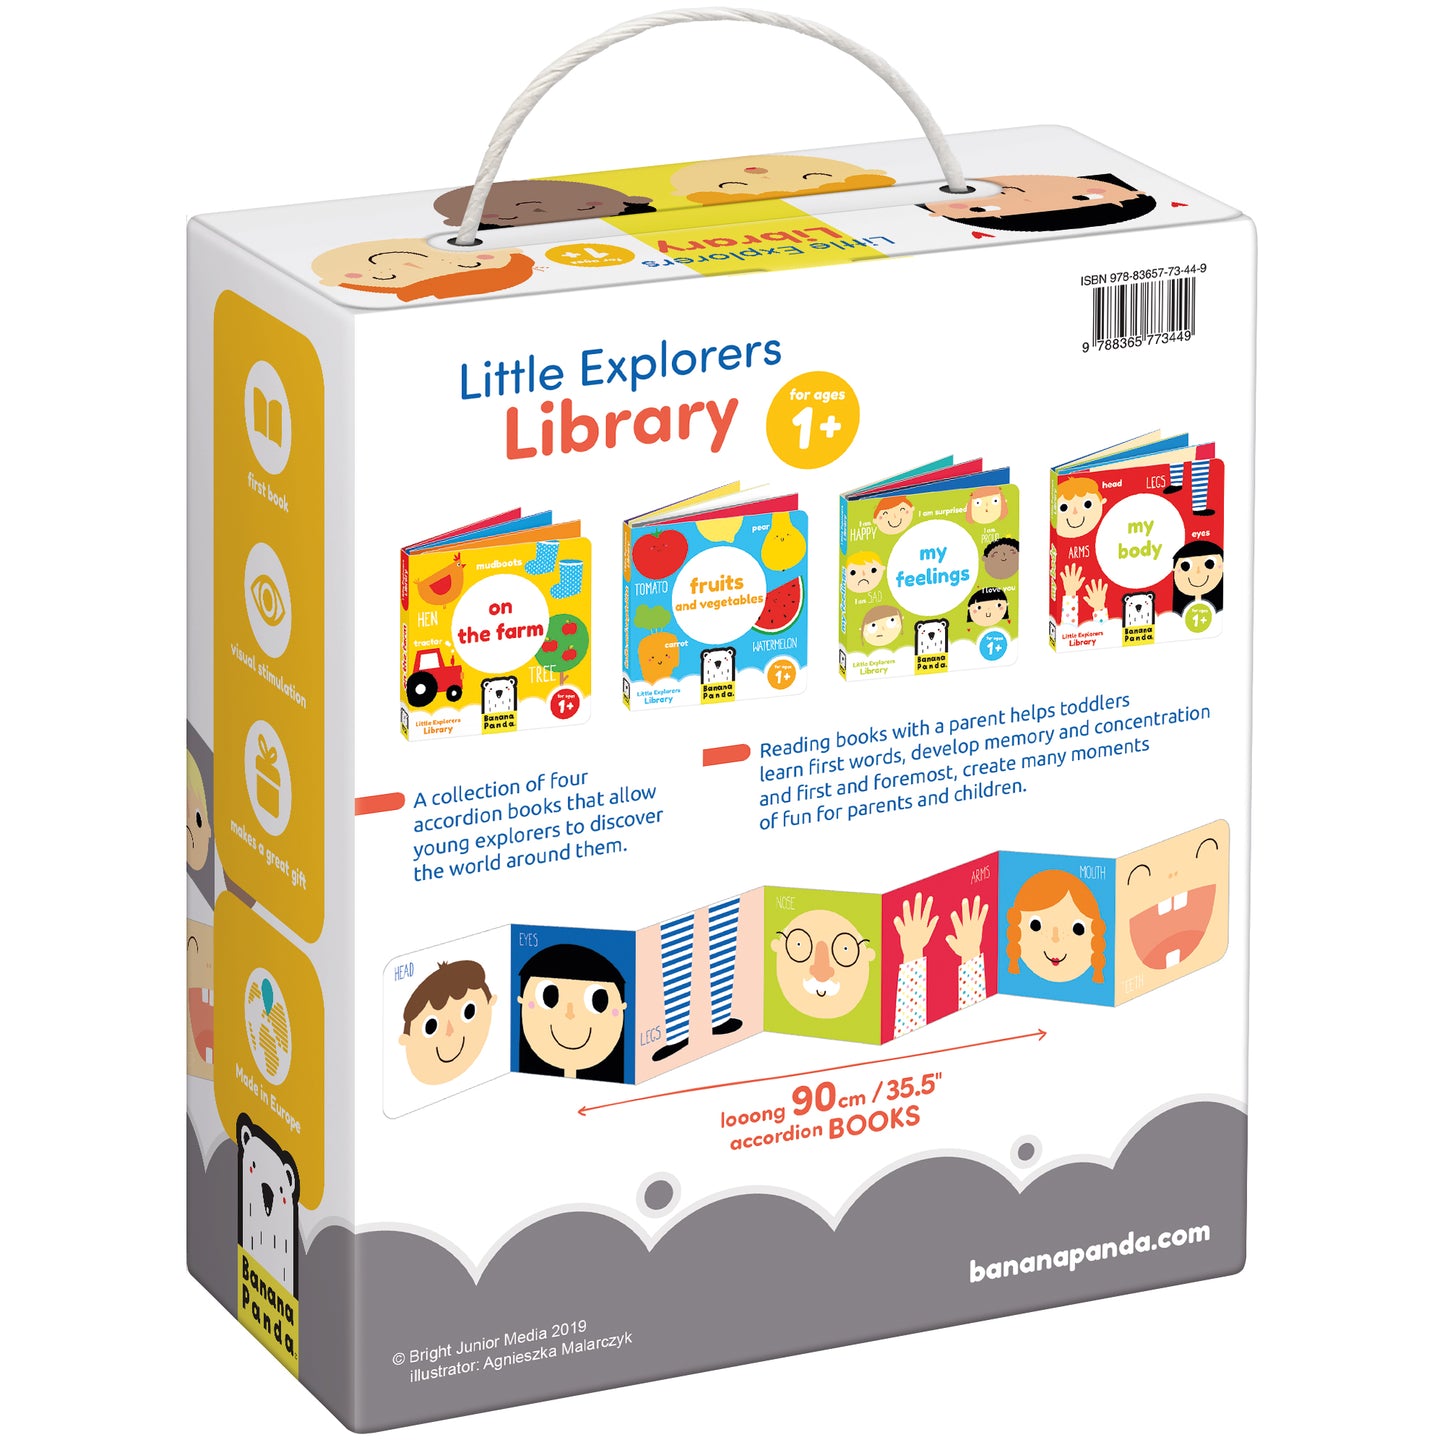 Banana Panda - Livros Little Explorers Library 1+